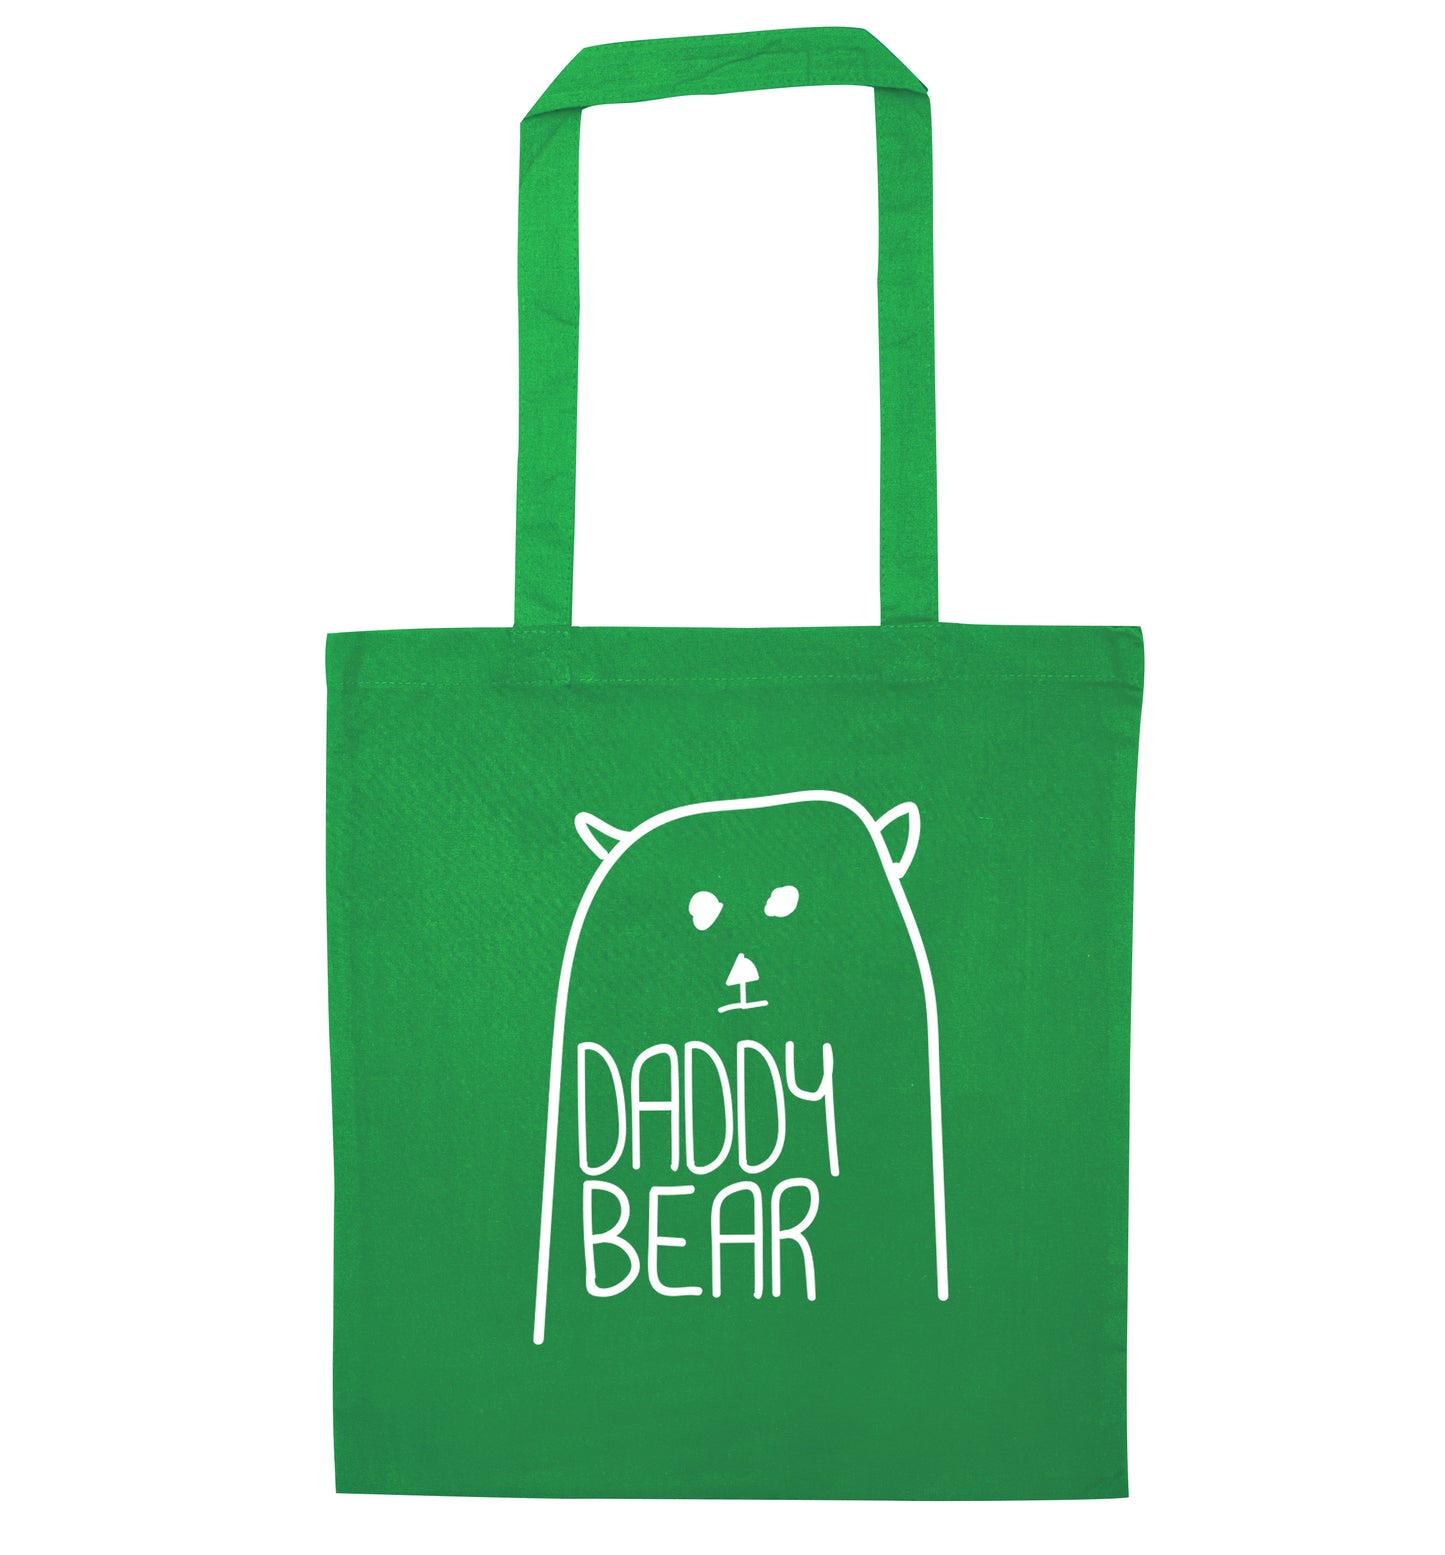 Daddy bear green tote bag